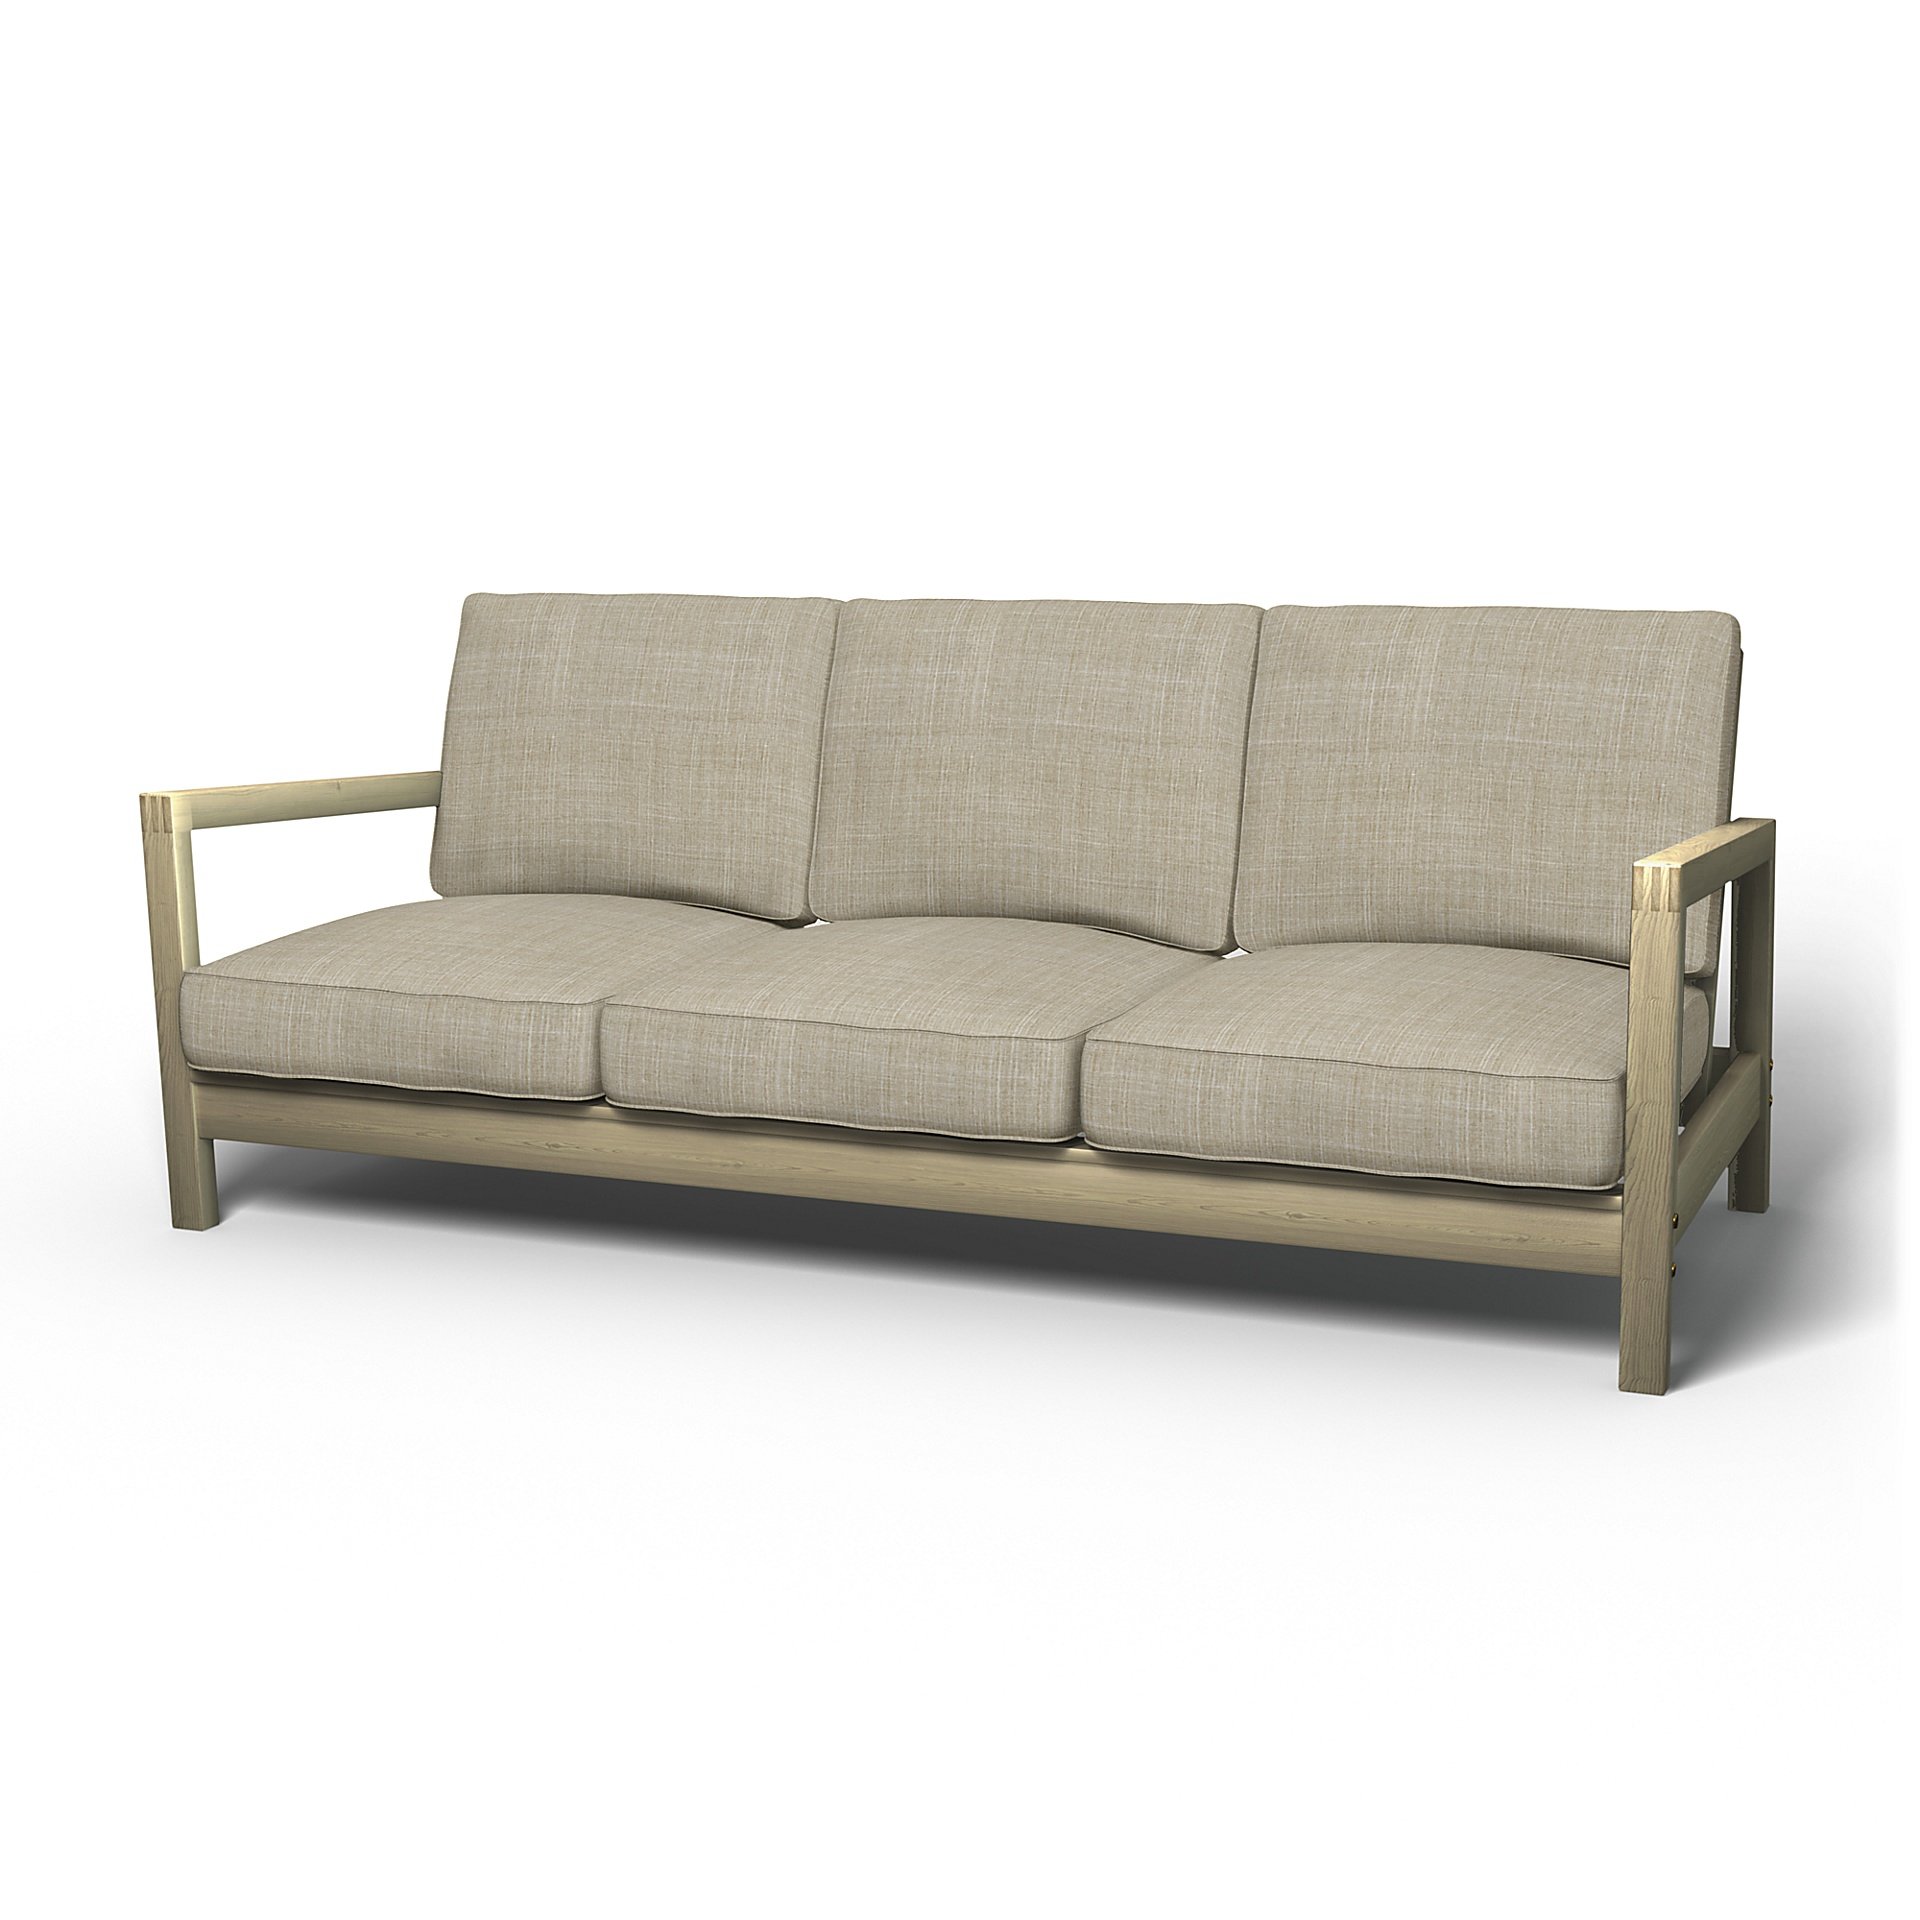 IKEA - Lillberg 3 Seater Sofa Cover, Sand Beige, Boucle & Texture - Bemz